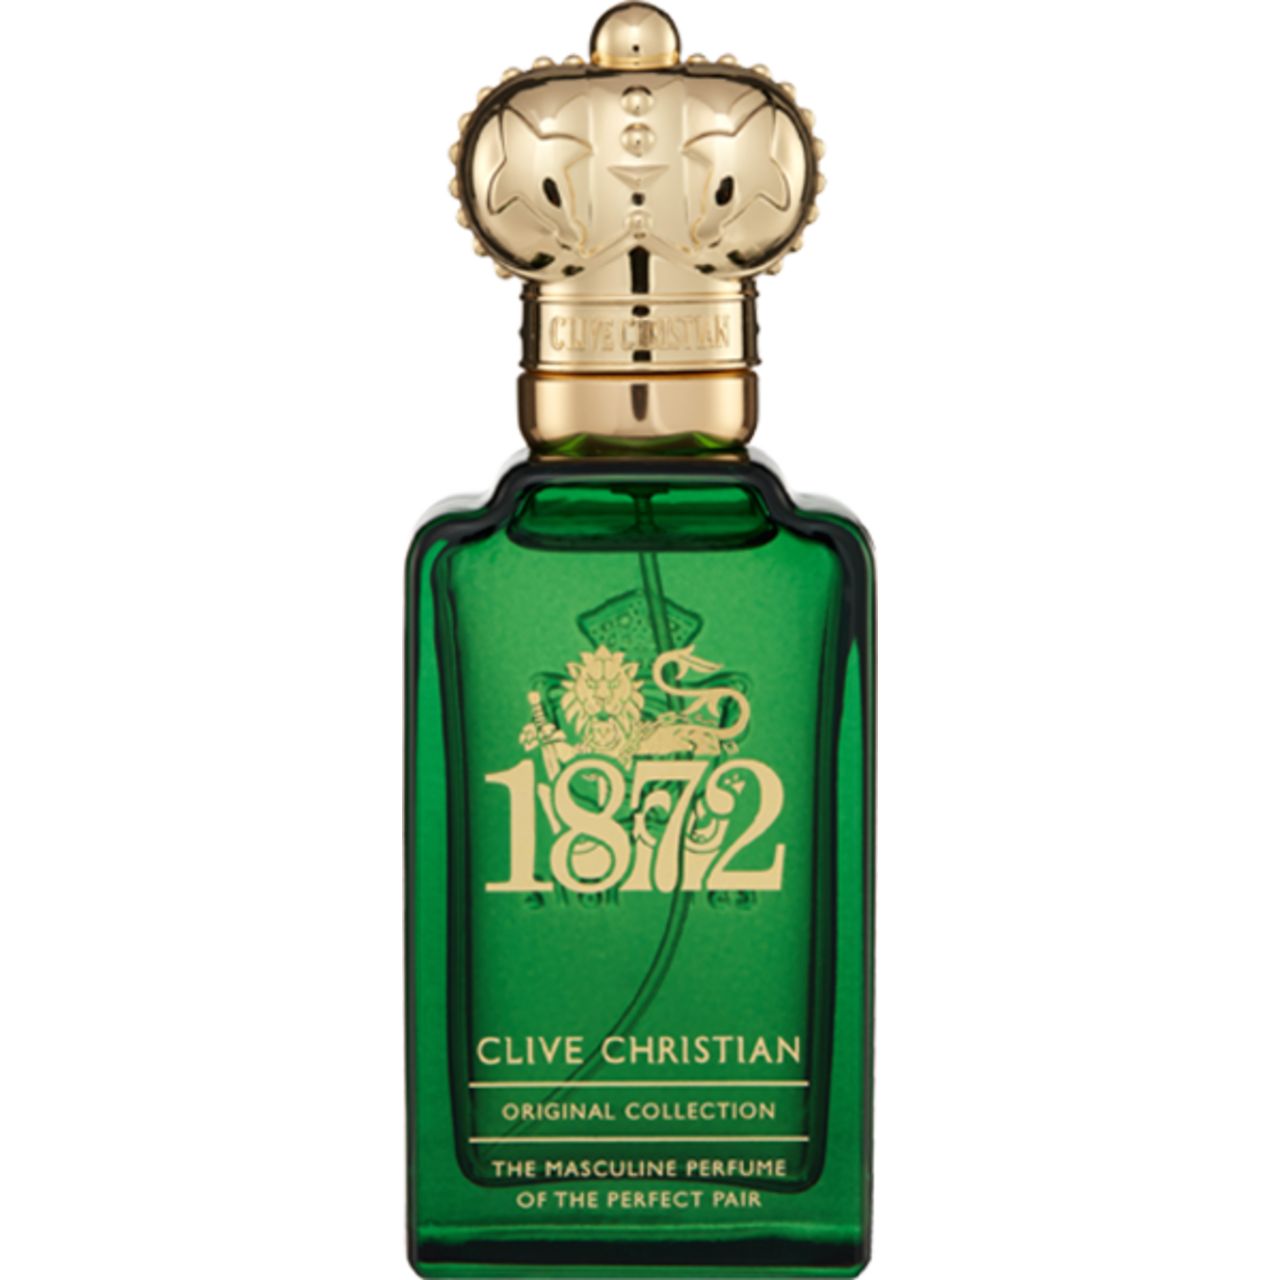 Clive Christian, 1872 Masculine Perfume Spray